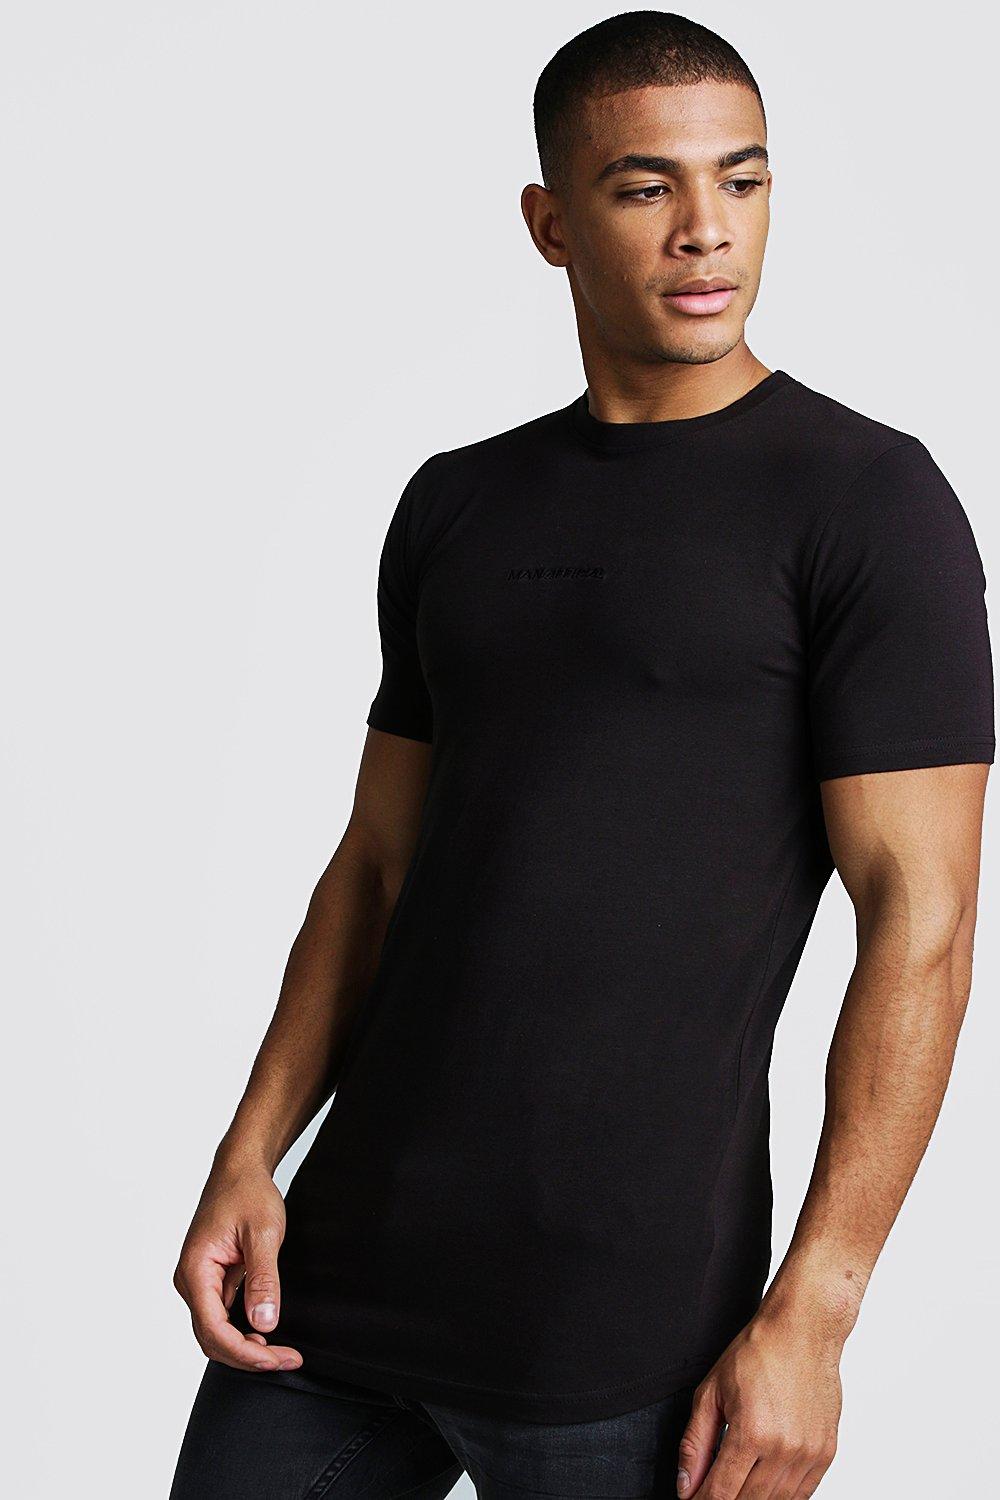 muscle fit black t shirt